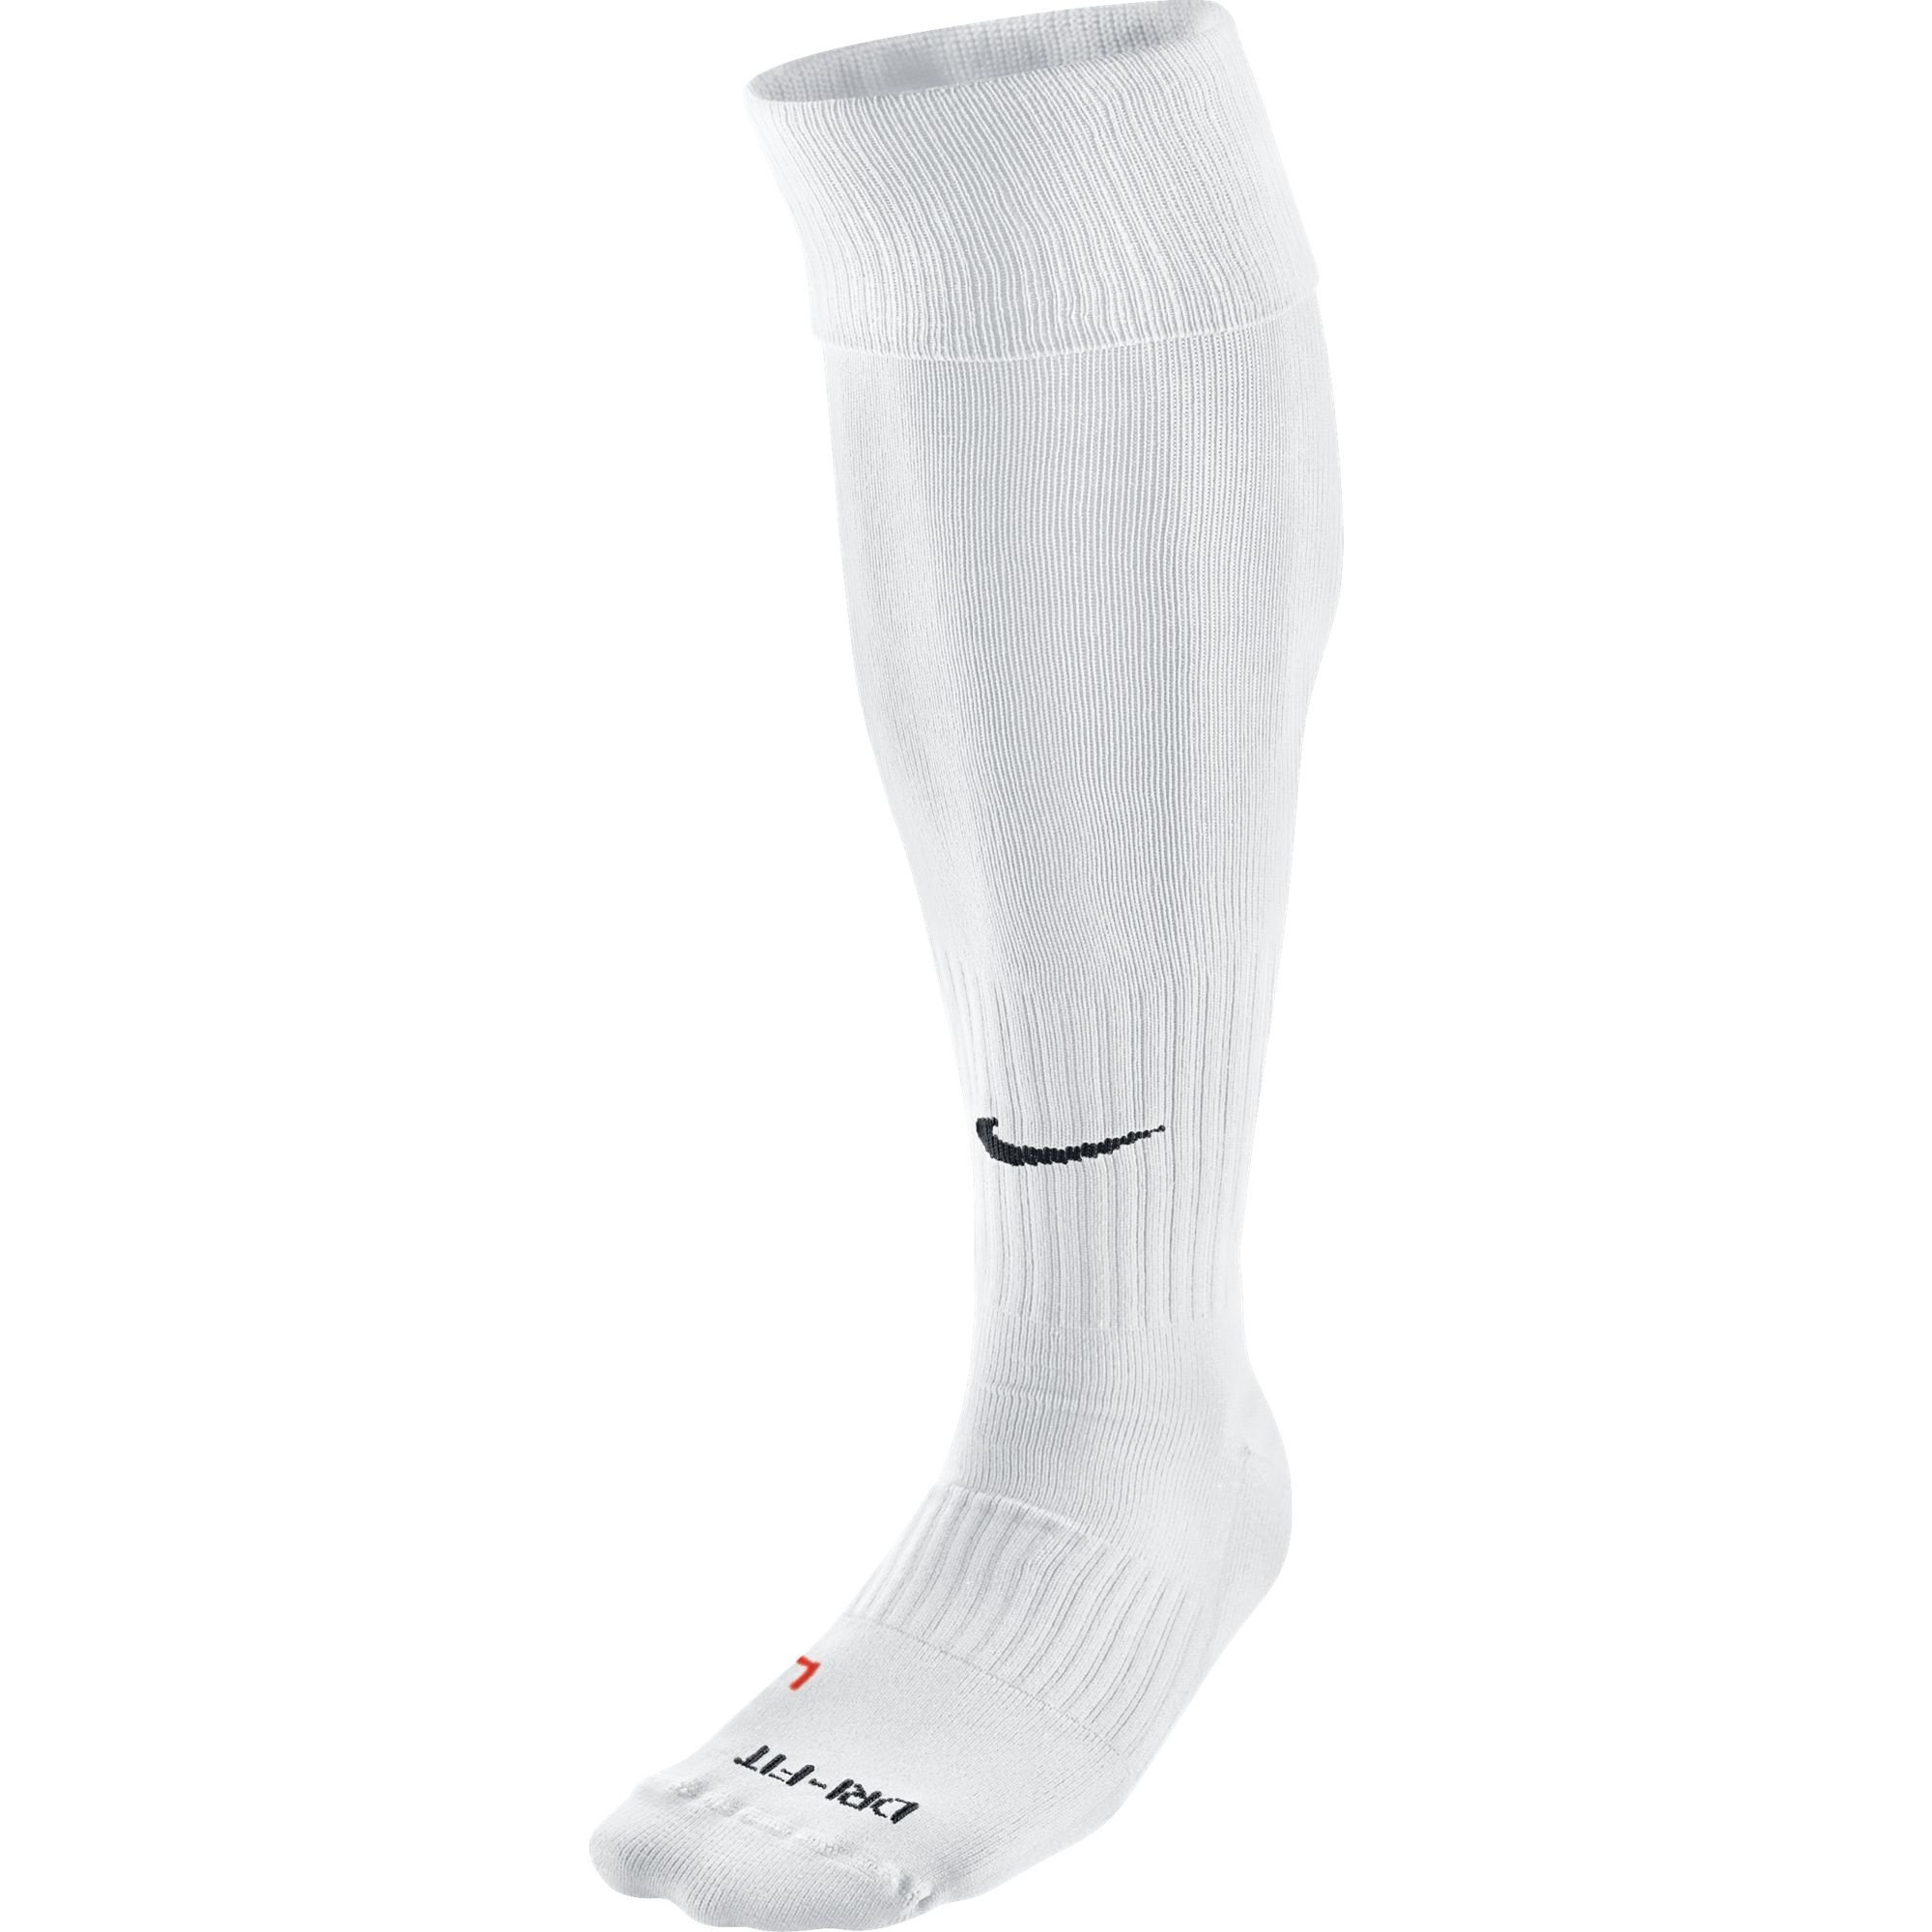 Nike Classic Soccer Sock